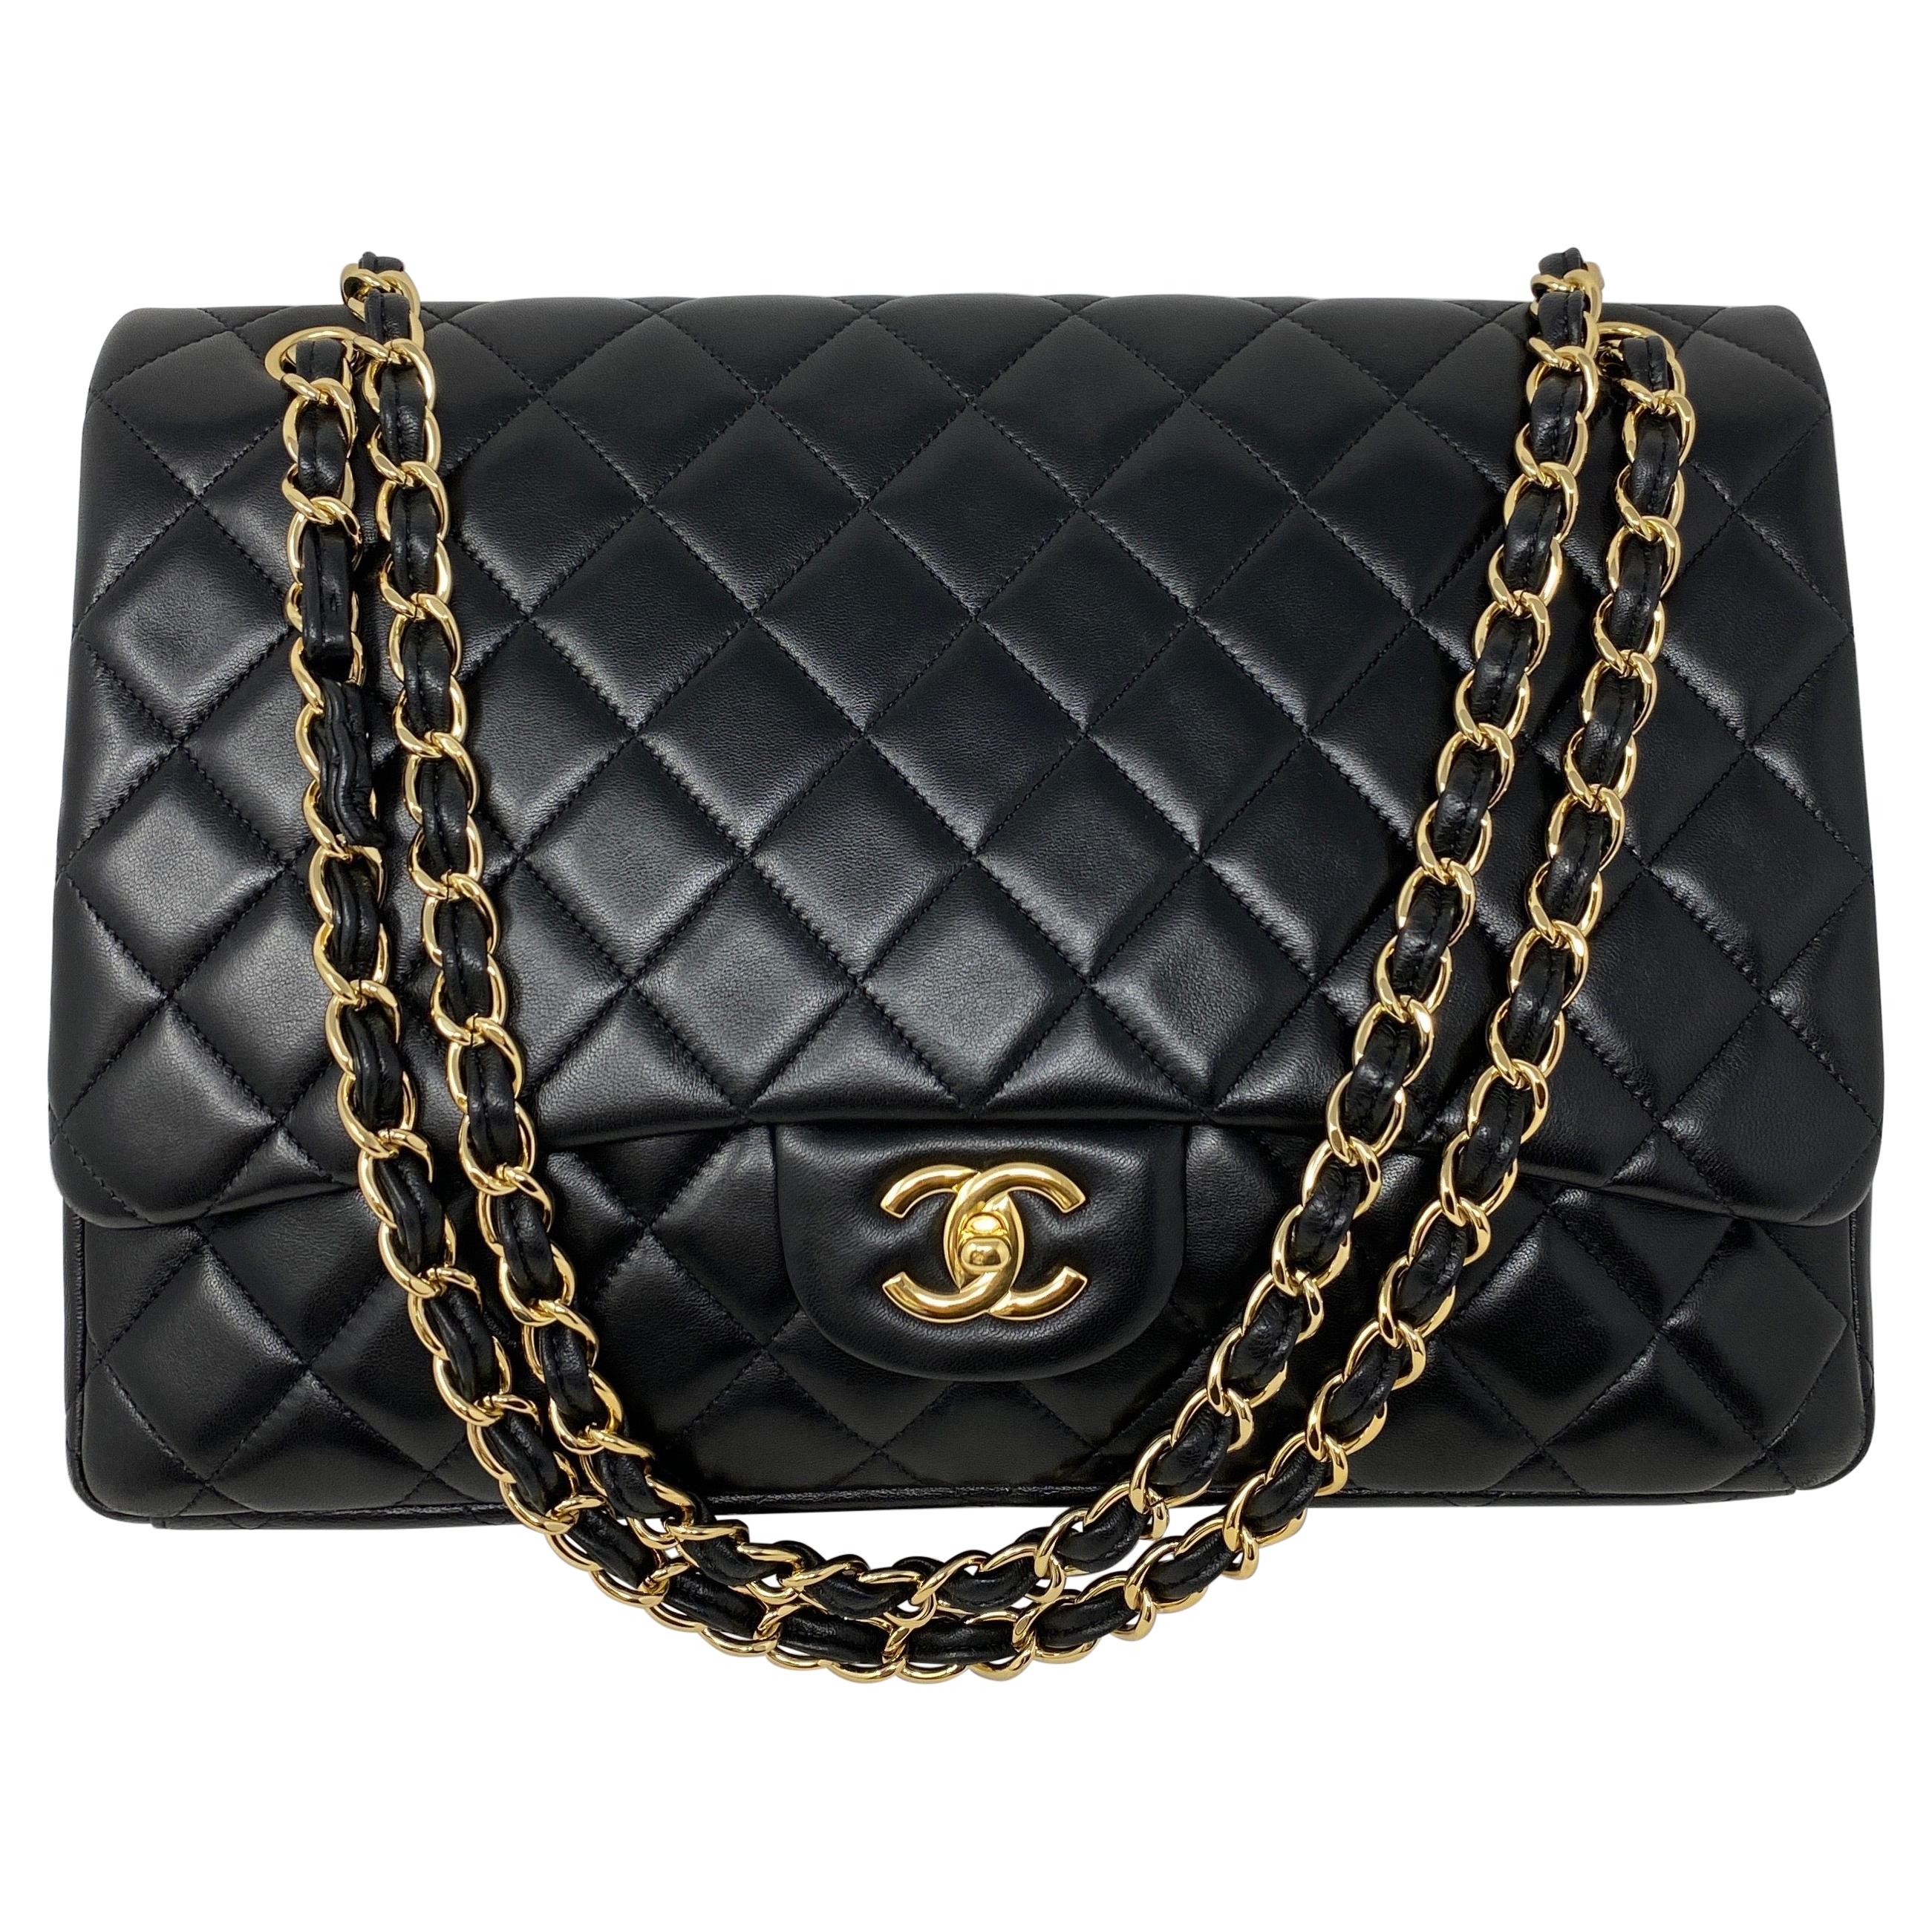 Chanel Black Lambskin Leather Maxi Bag 